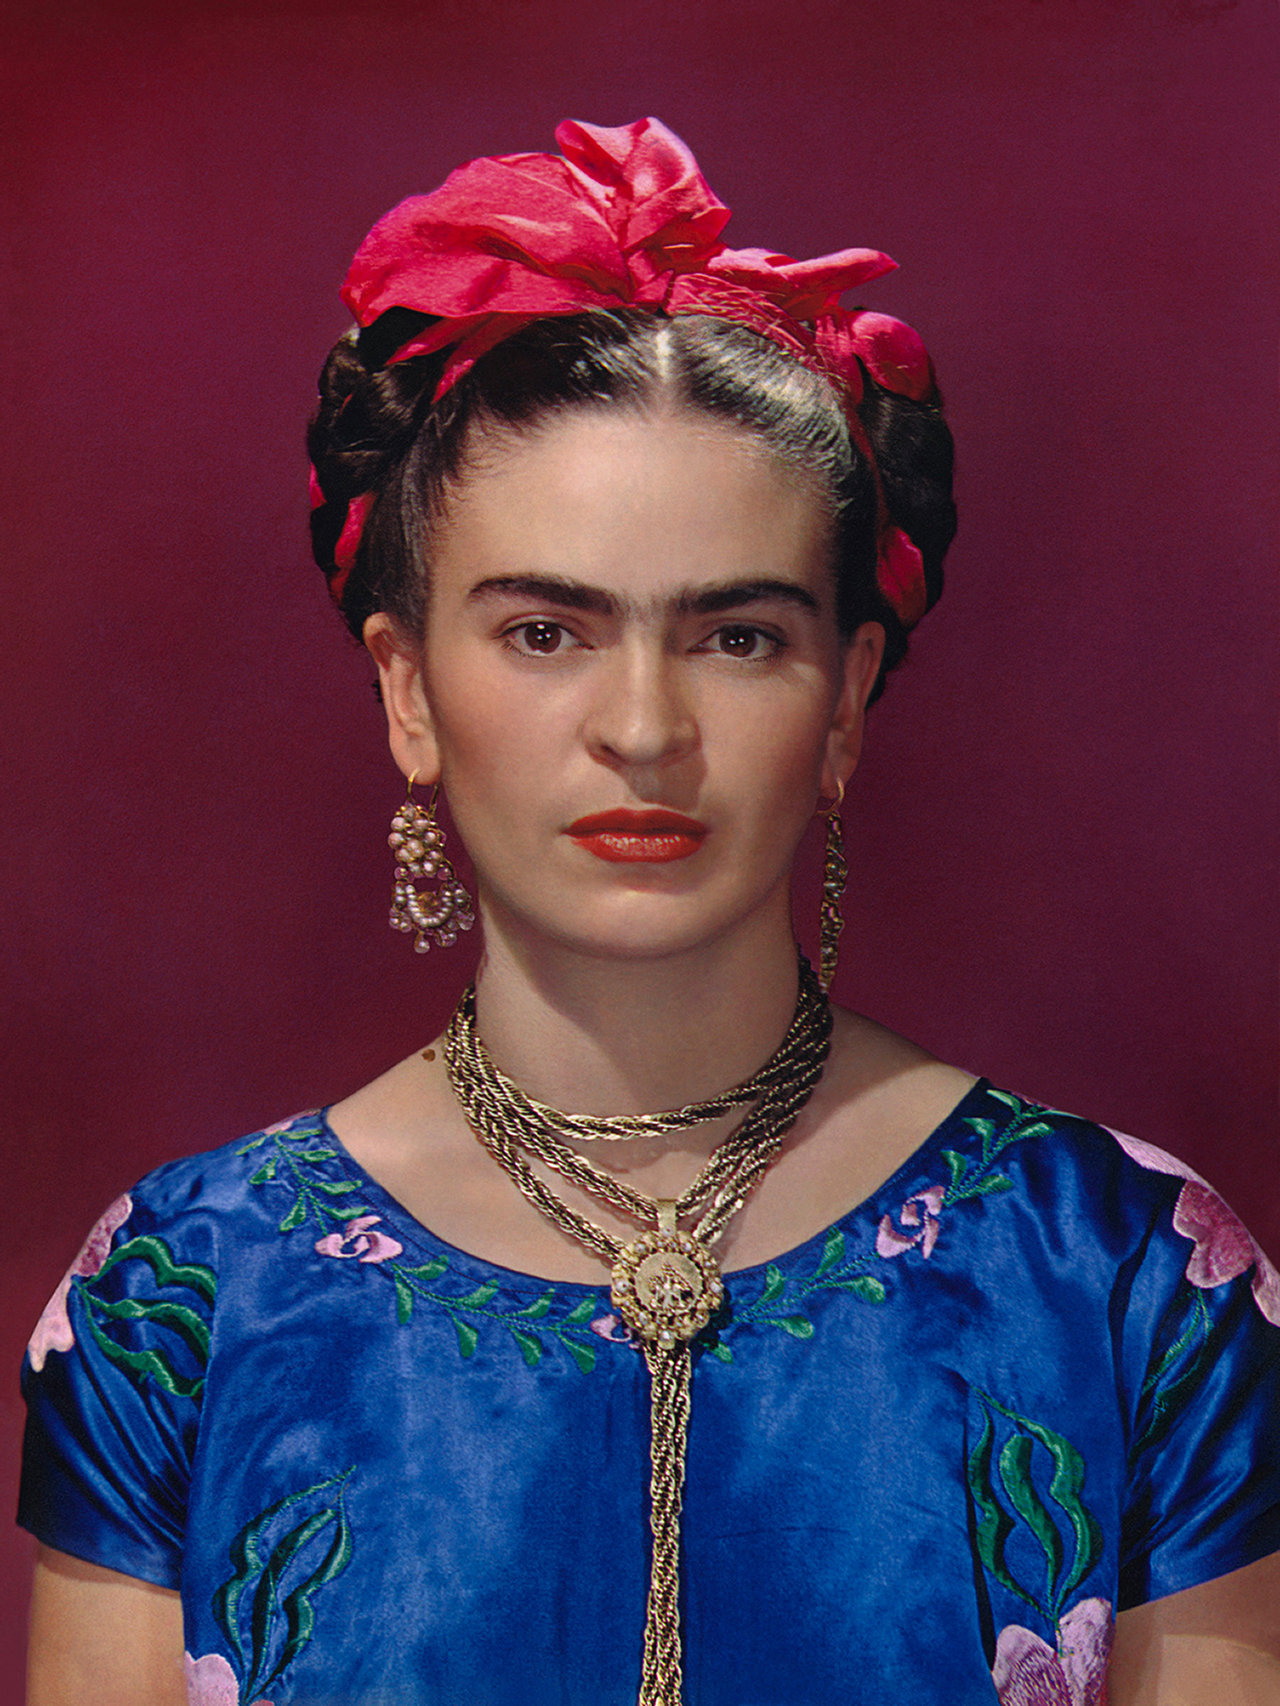 Nickolas Muray, Frida Kahlo in blauwe blouse, 1939, foto, 32,4 x 24,1 cm, Throckmorton Fine Art, New York 